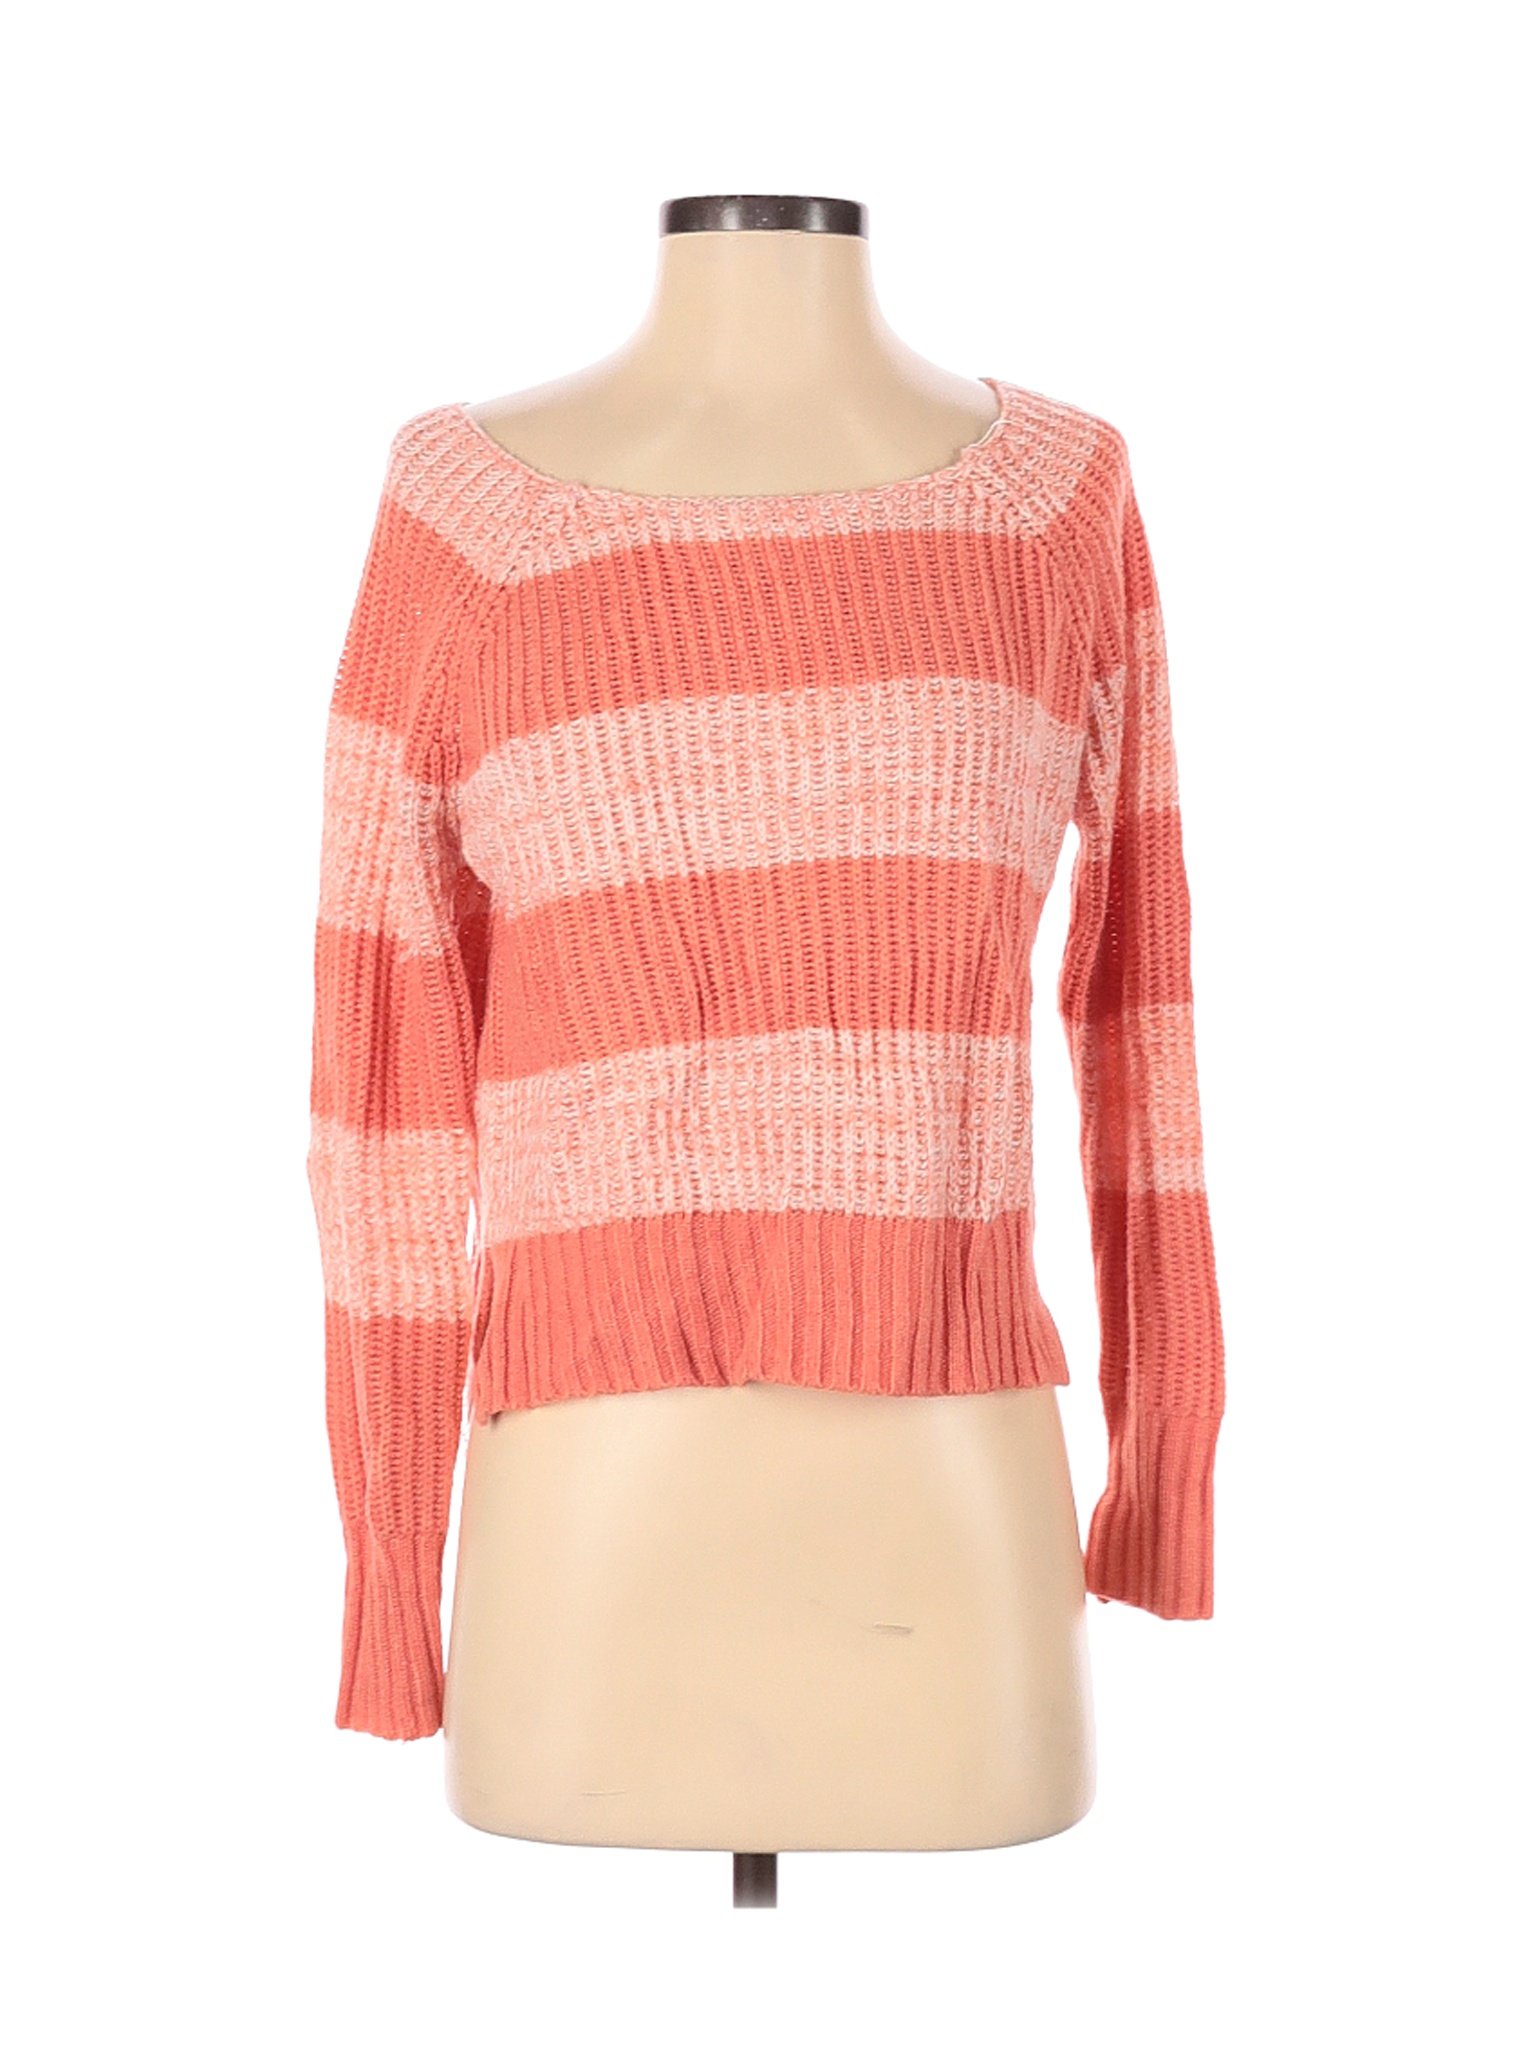 Rue21 Women Pink Pullover Sweater S | eBay